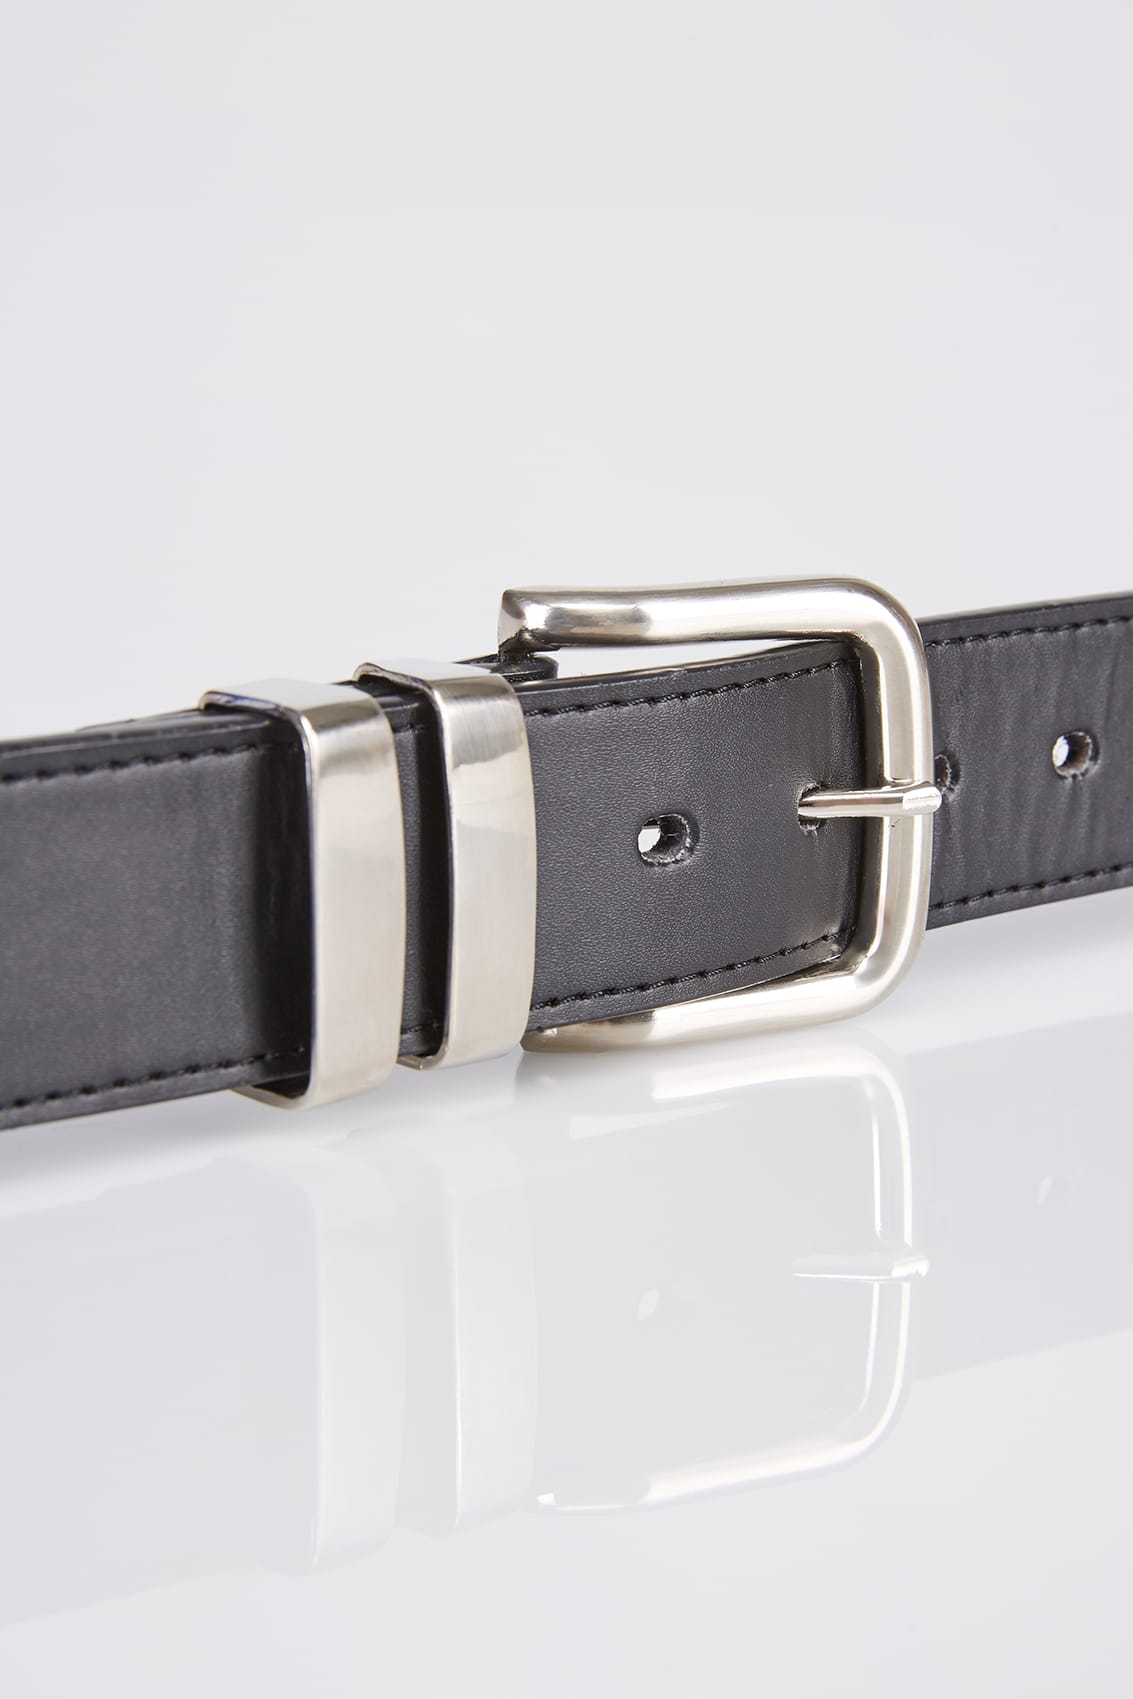 D555 Black Kingsize Leather Belt With Silver Buckle Sizes 2XL, 3XL, 4XL ...